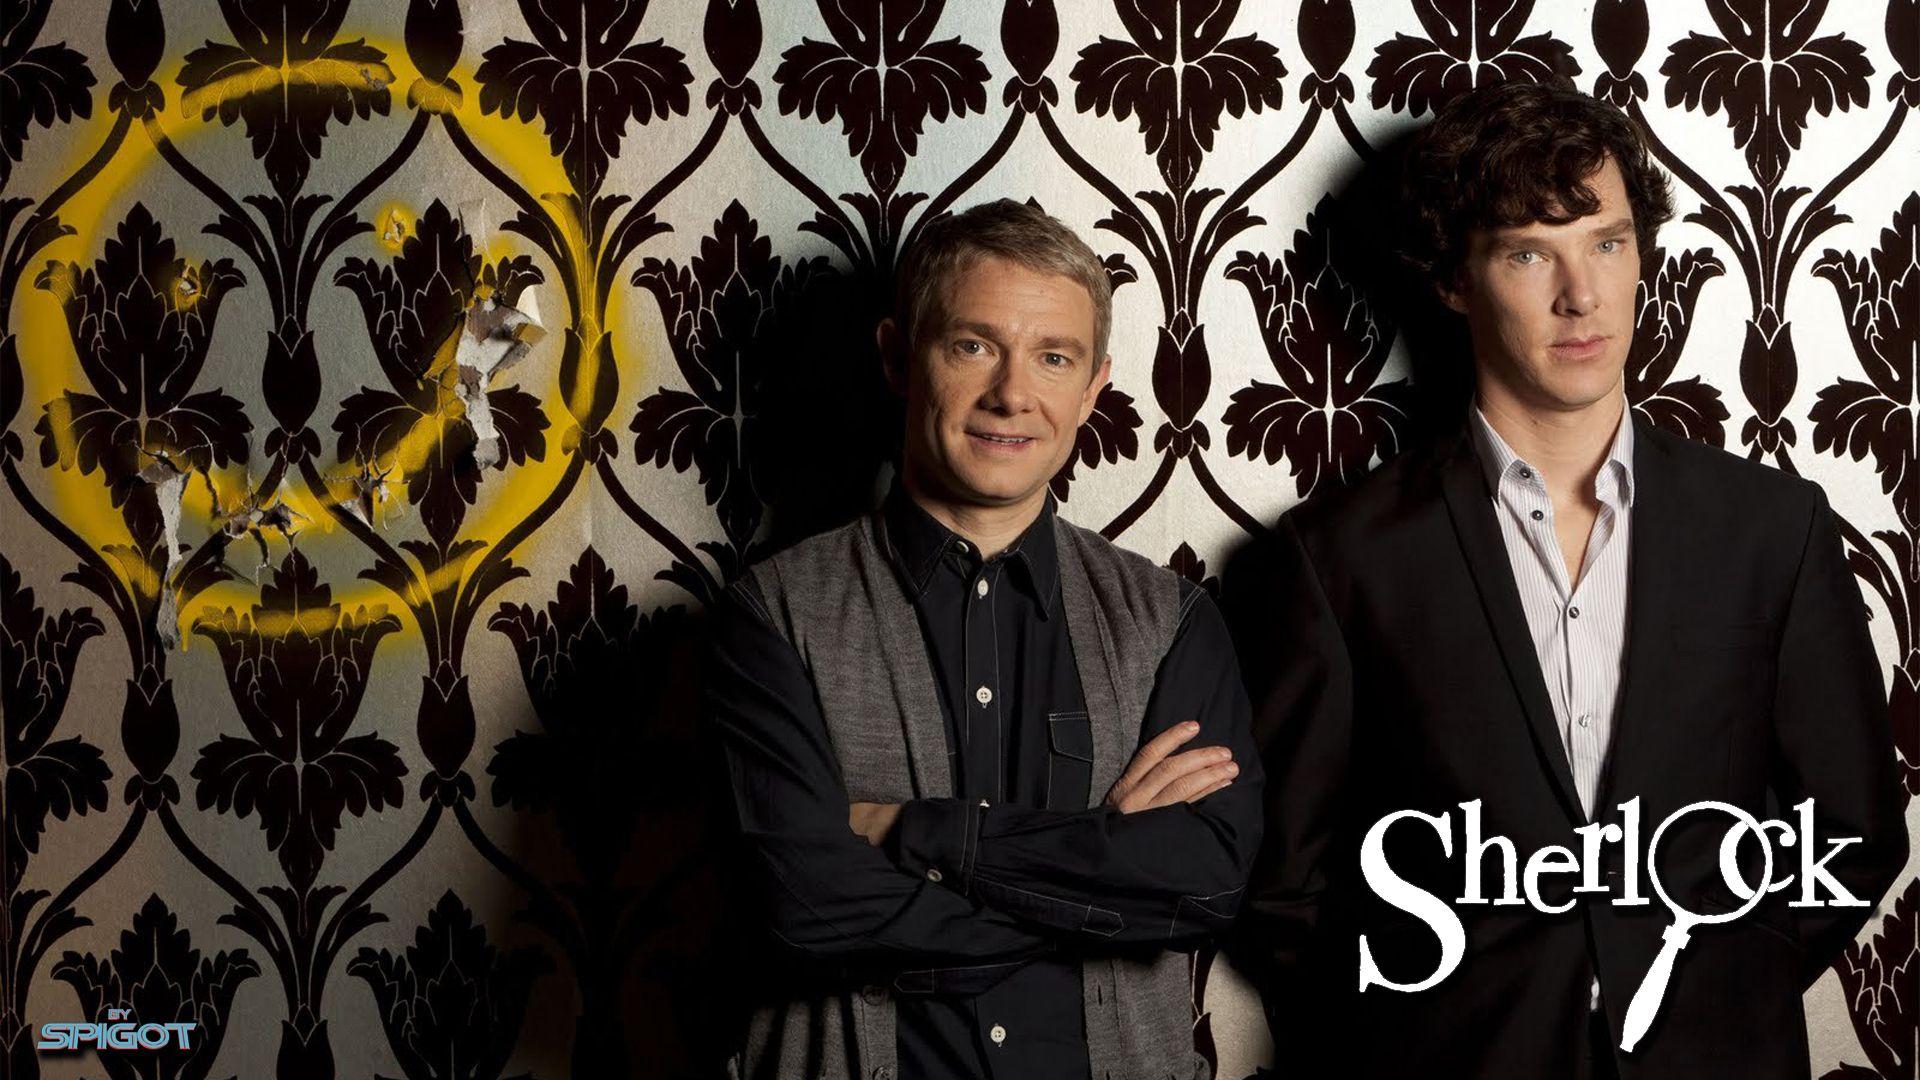 Sherlock Wallpaper. George Spigot's Blog